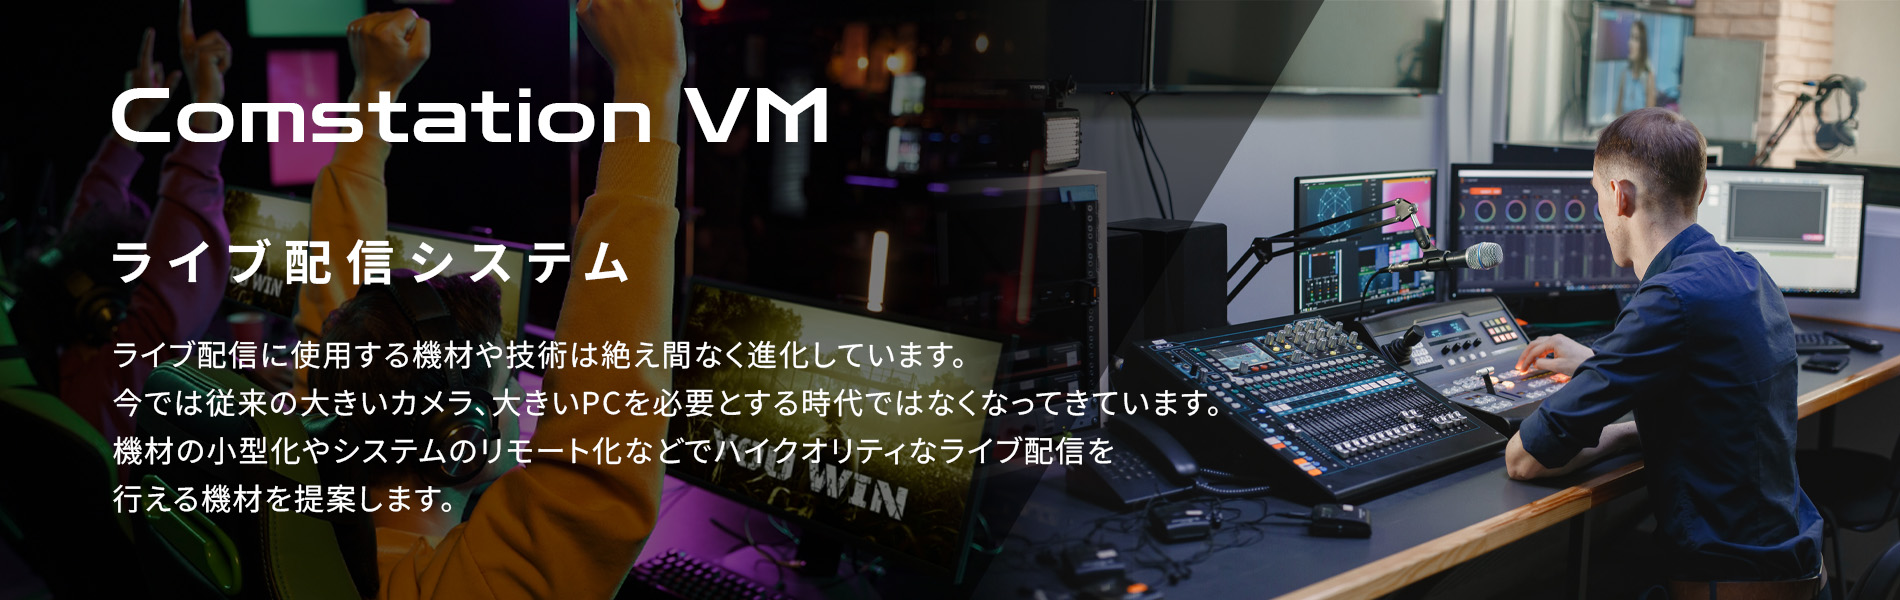 Comstation-VM